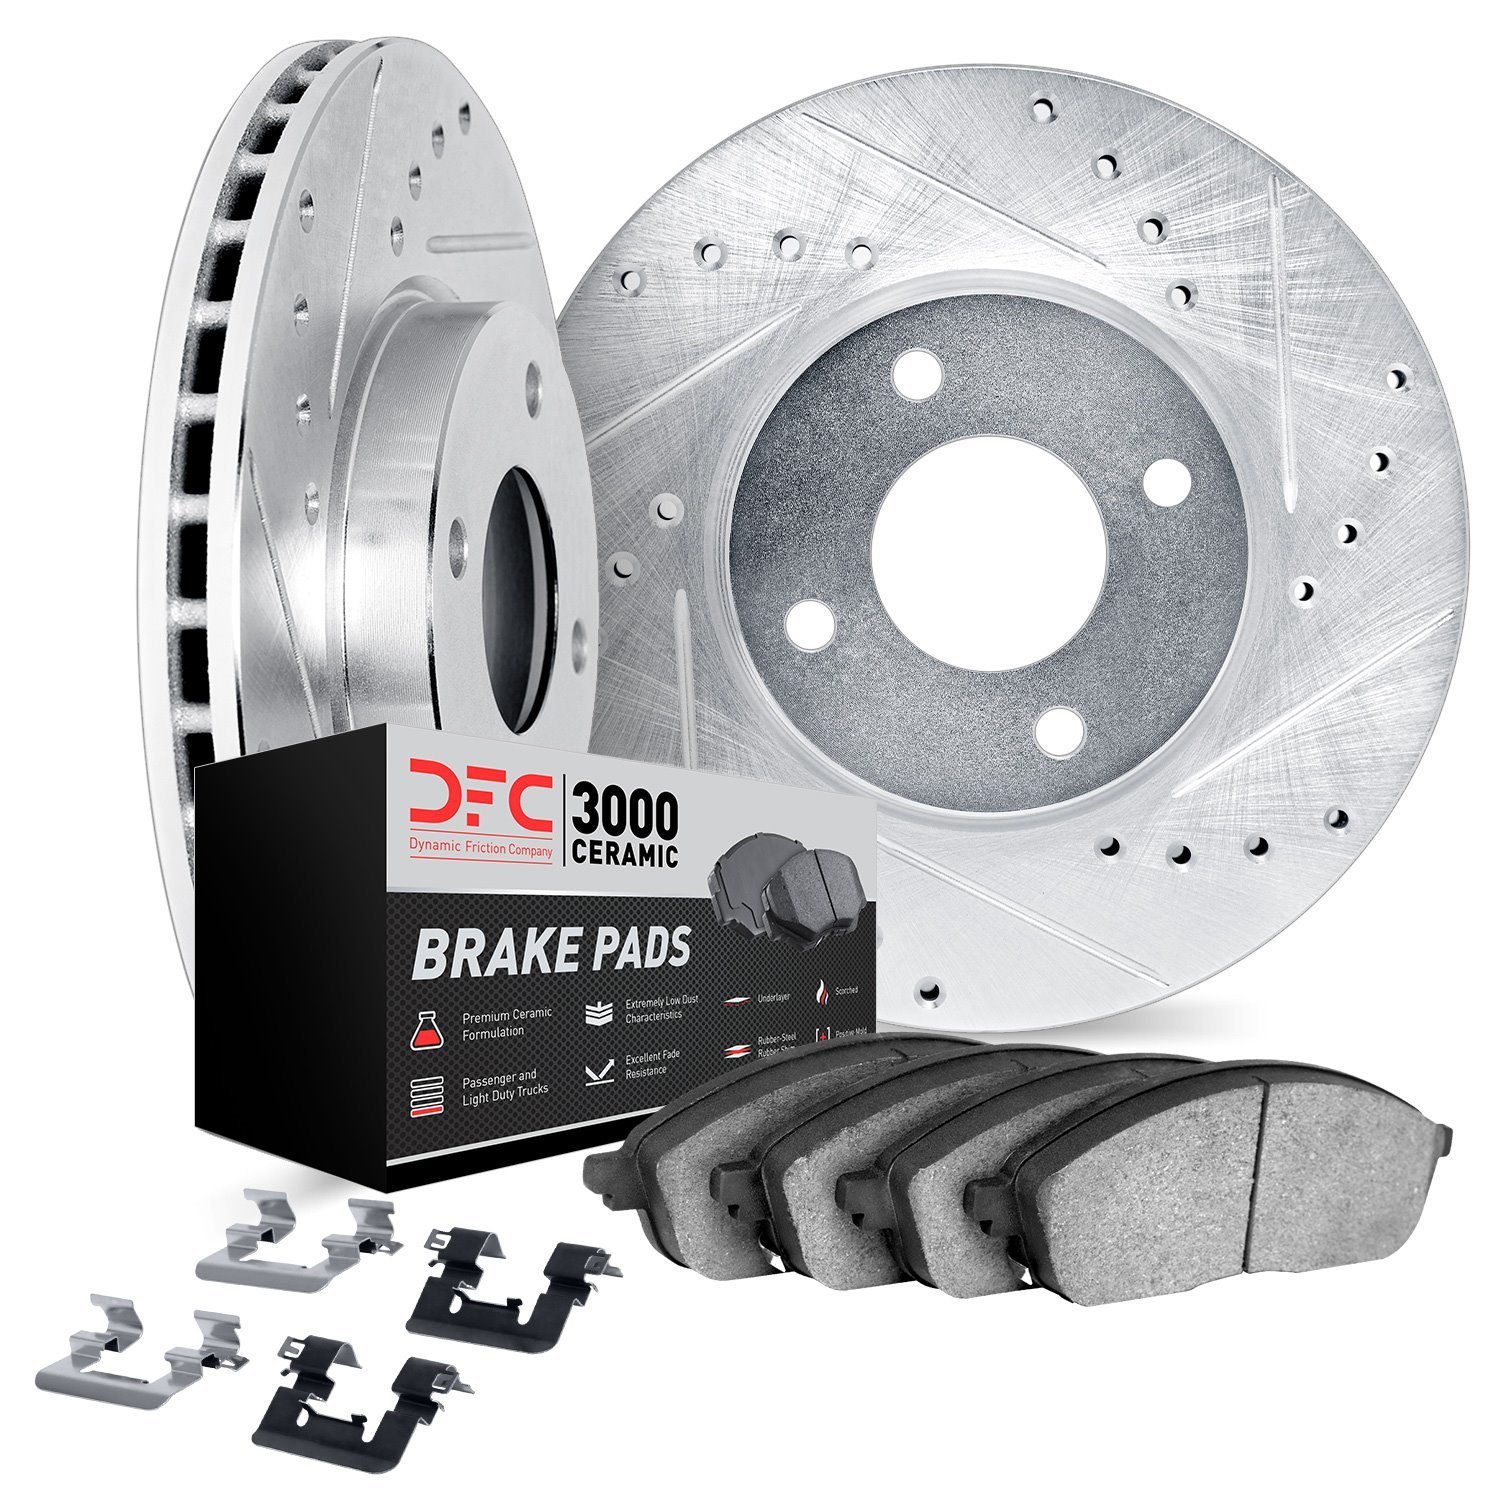 7312-67132 Drilled/Slotted Brake Rotor with 3000-Series Ceramic Brake Pads Kit & Hardware [Silver], Fits Select Infiniti/Nissan,